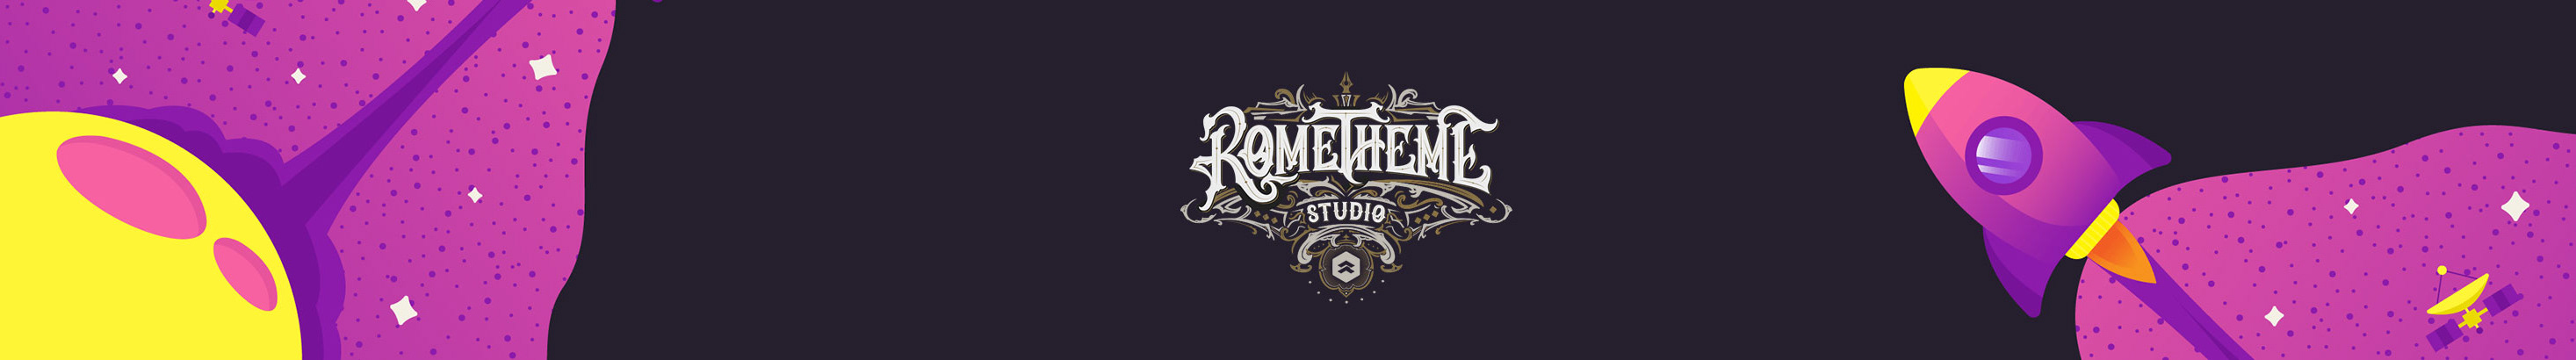 Rometheme Studio's profile banner